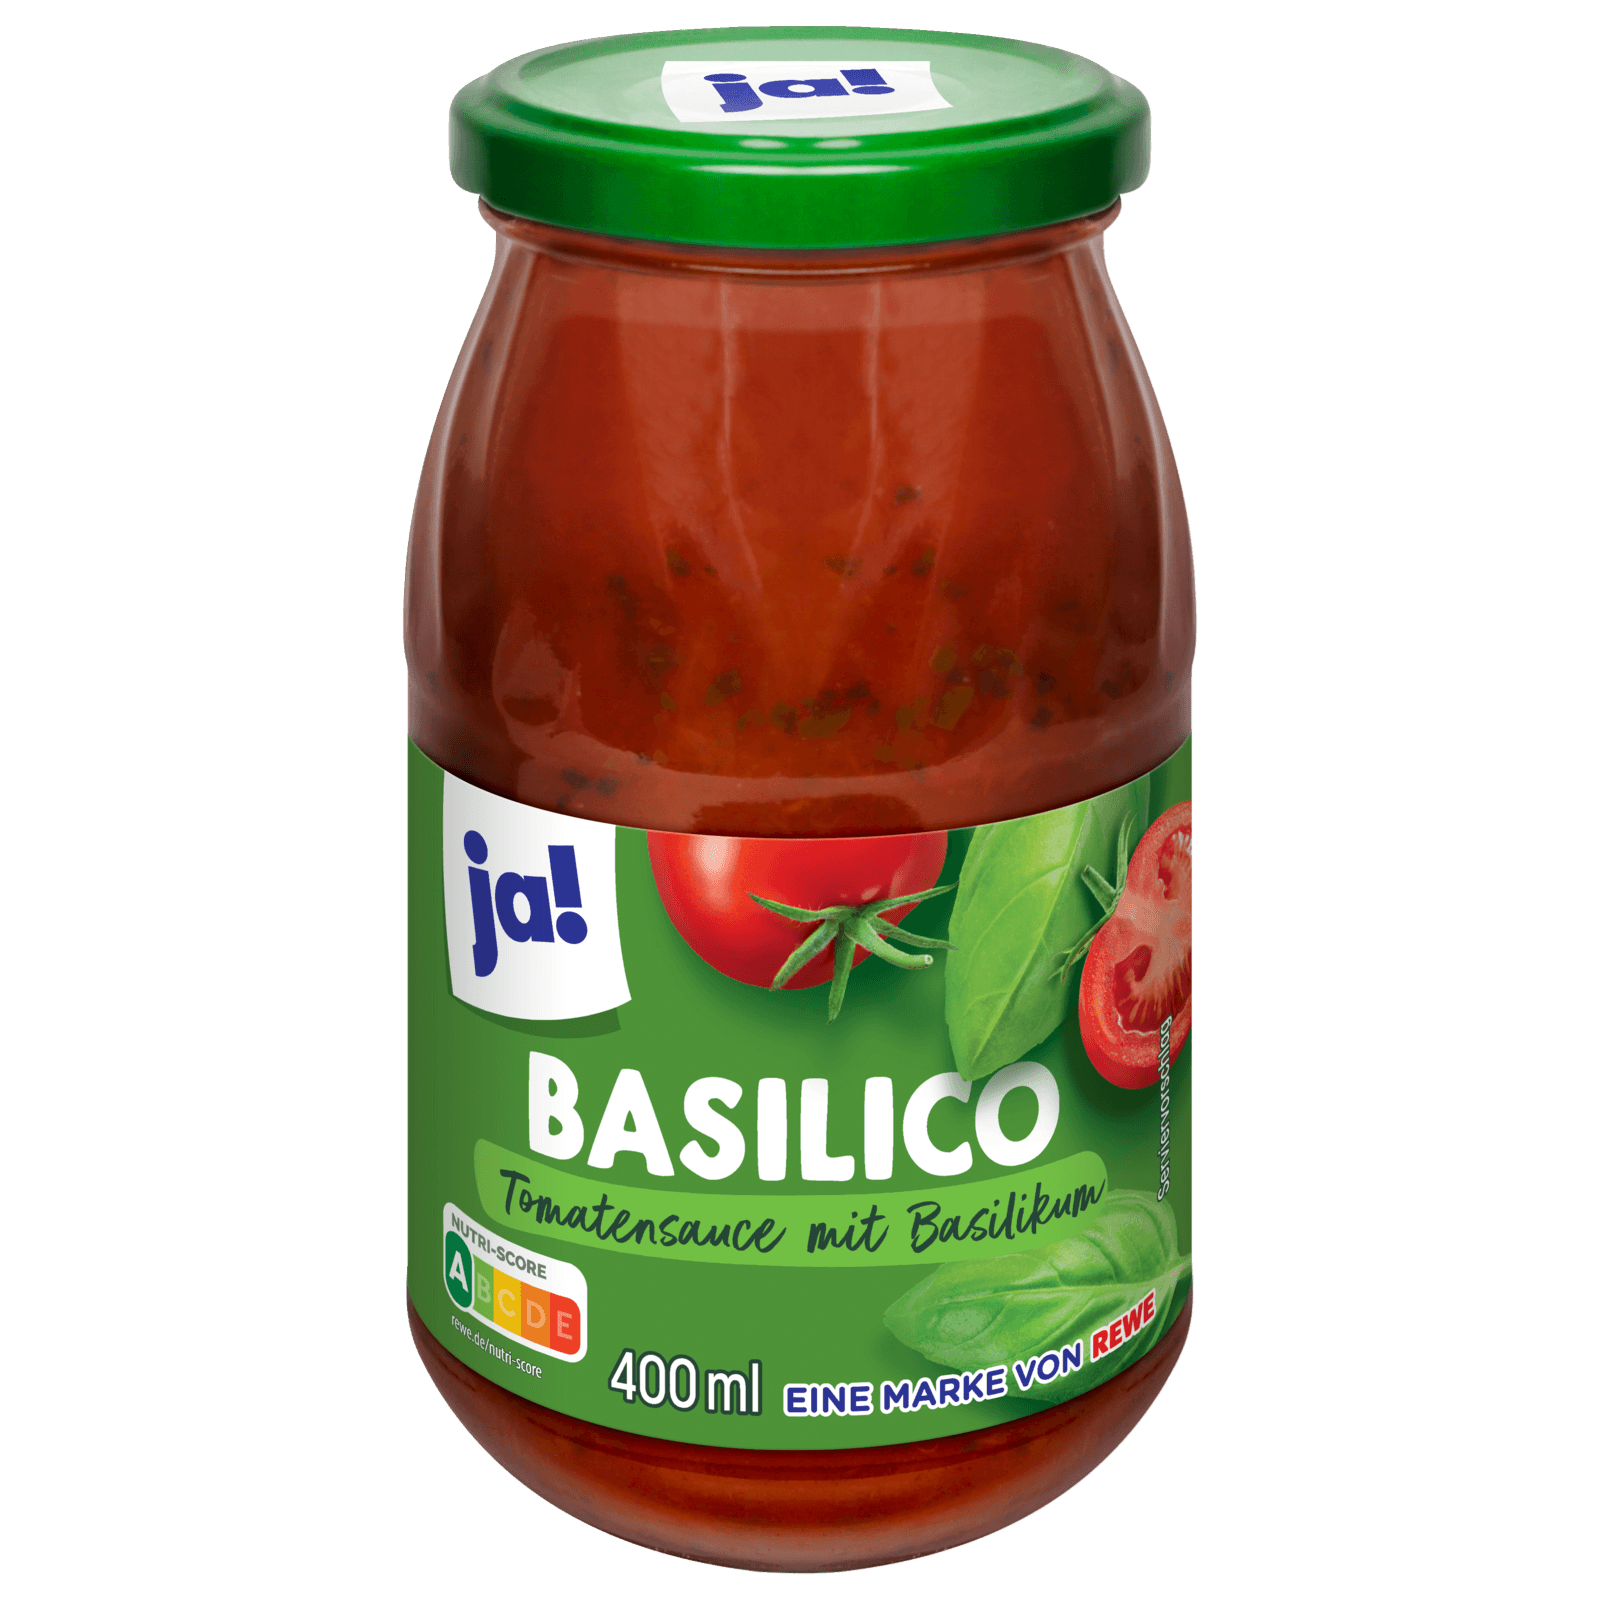 ja! Tomate-Basilikum Pasta-Sauce 400g bei REWE online bestellen!